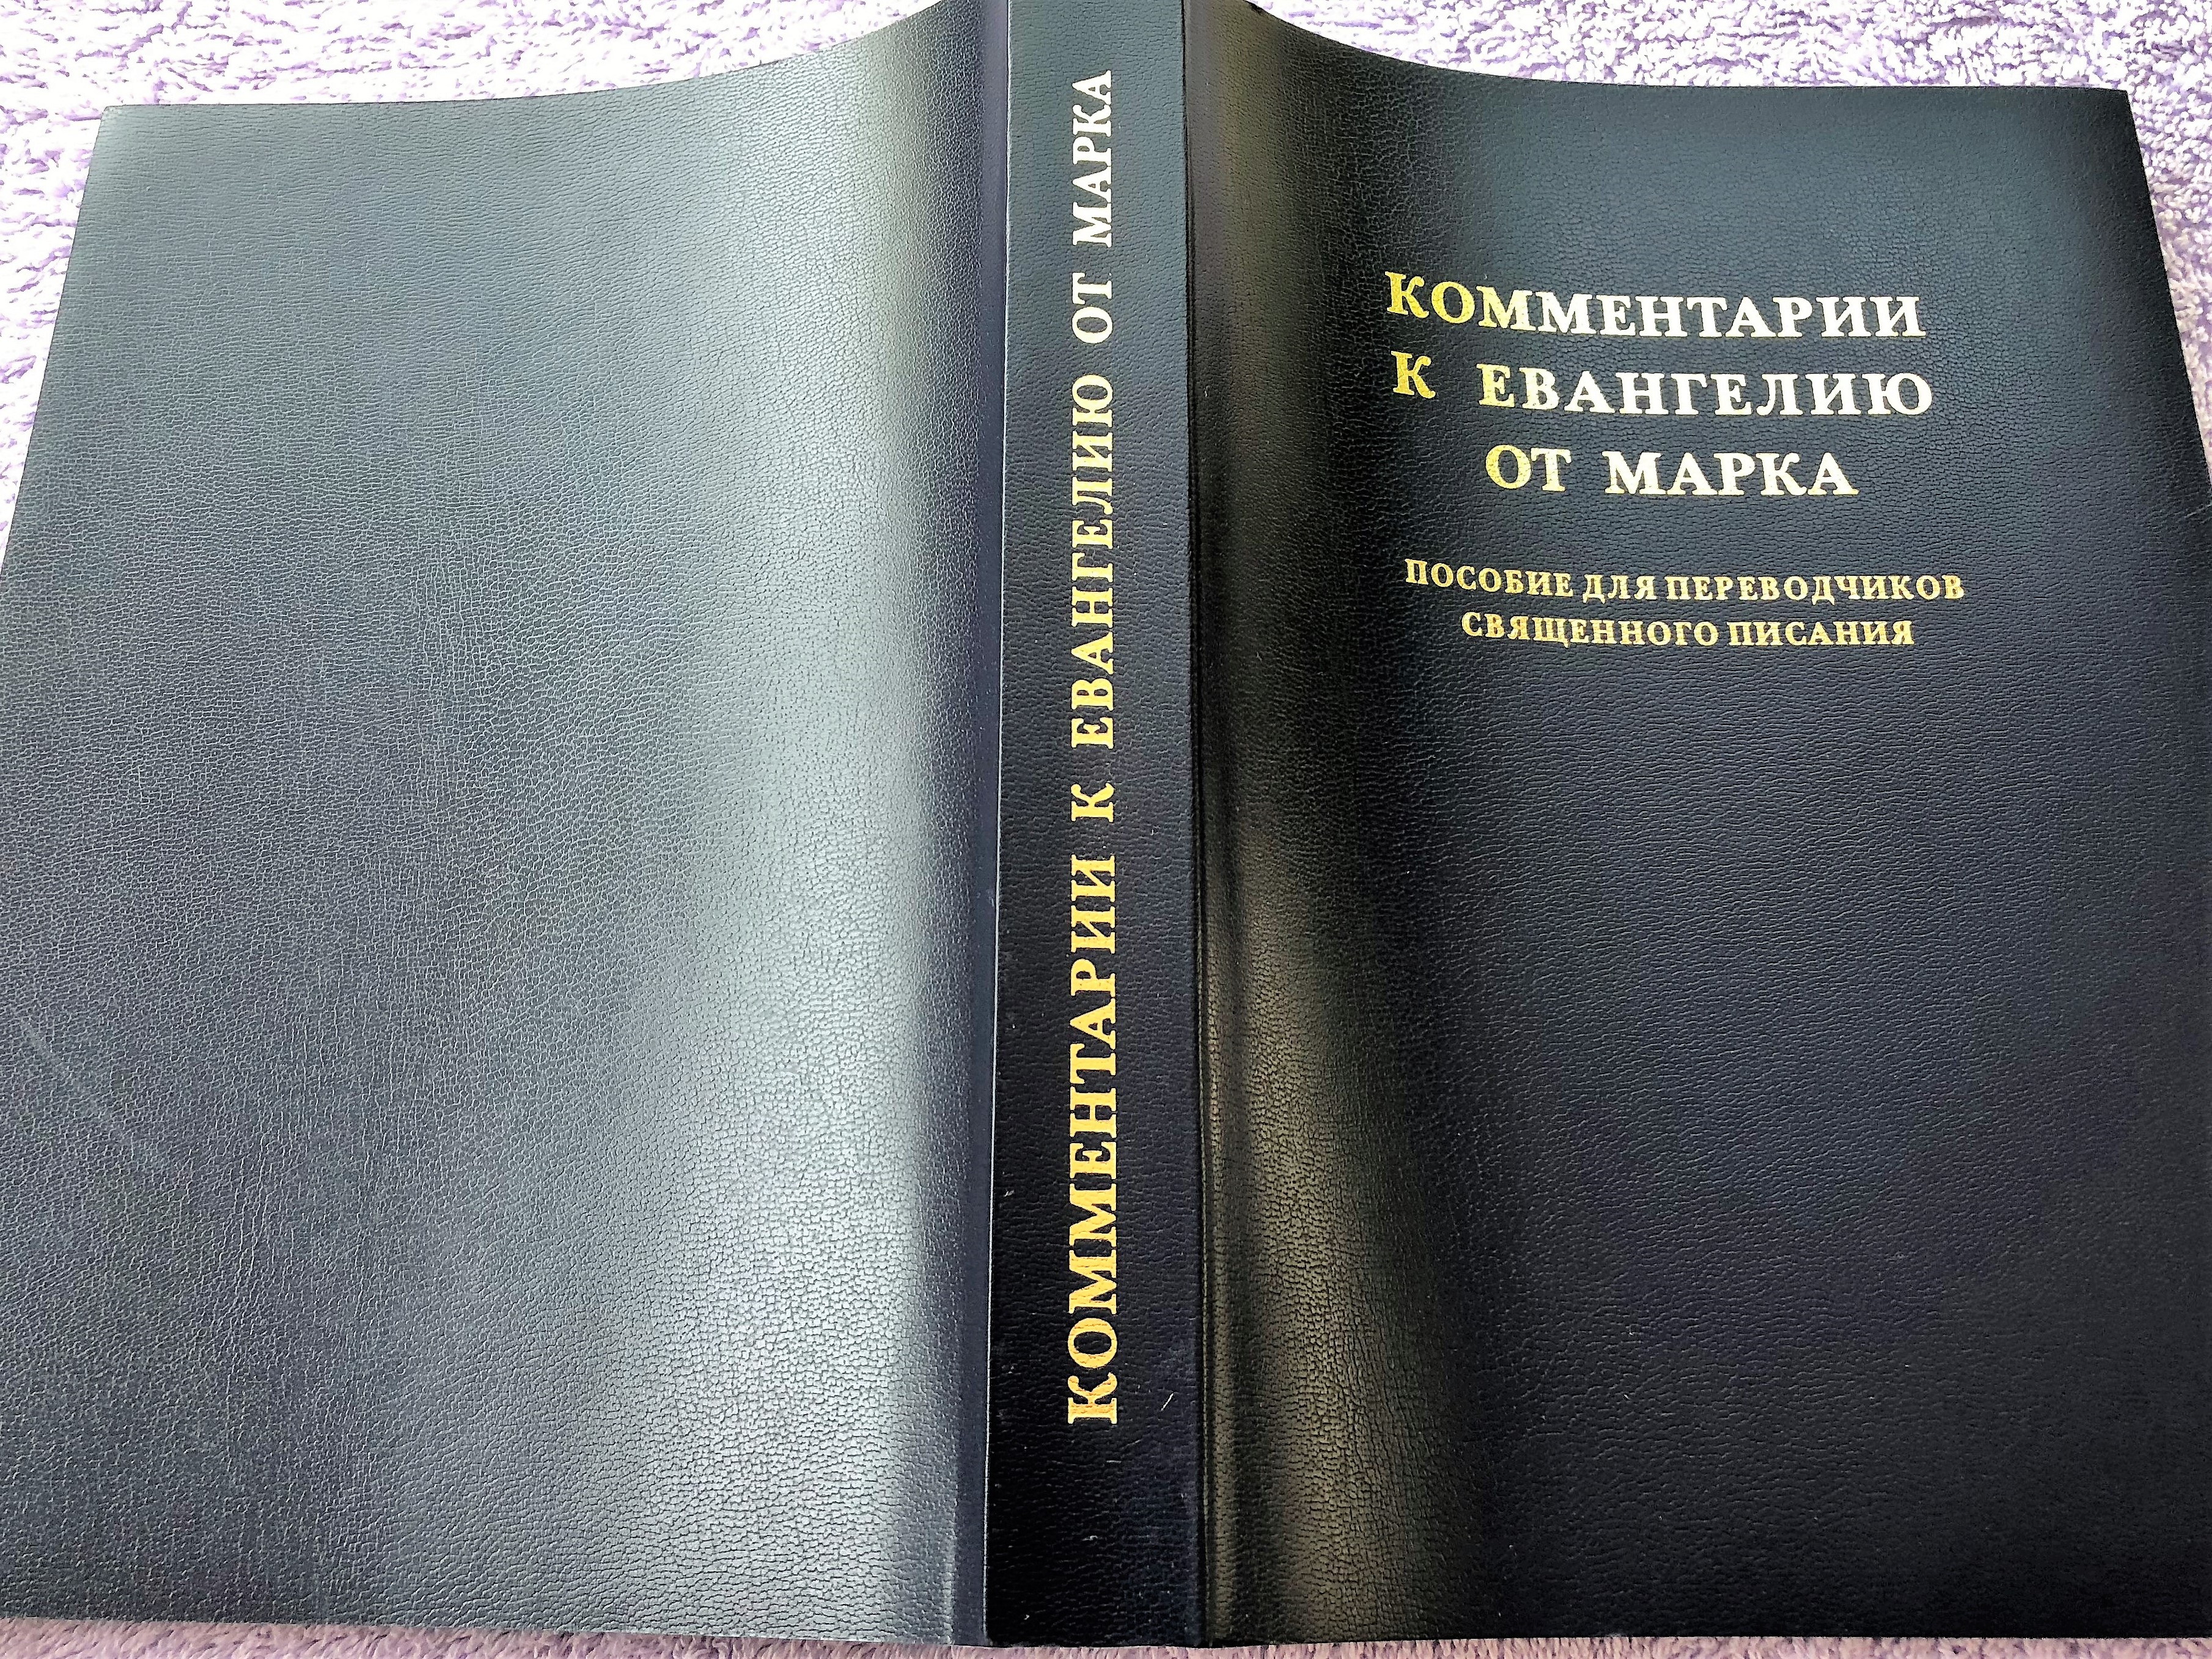 russian-language-edition-of-the-helps-for-bible-translators-a-translator-s-handbook-on-the-gospel-of-mark-16-.jpg